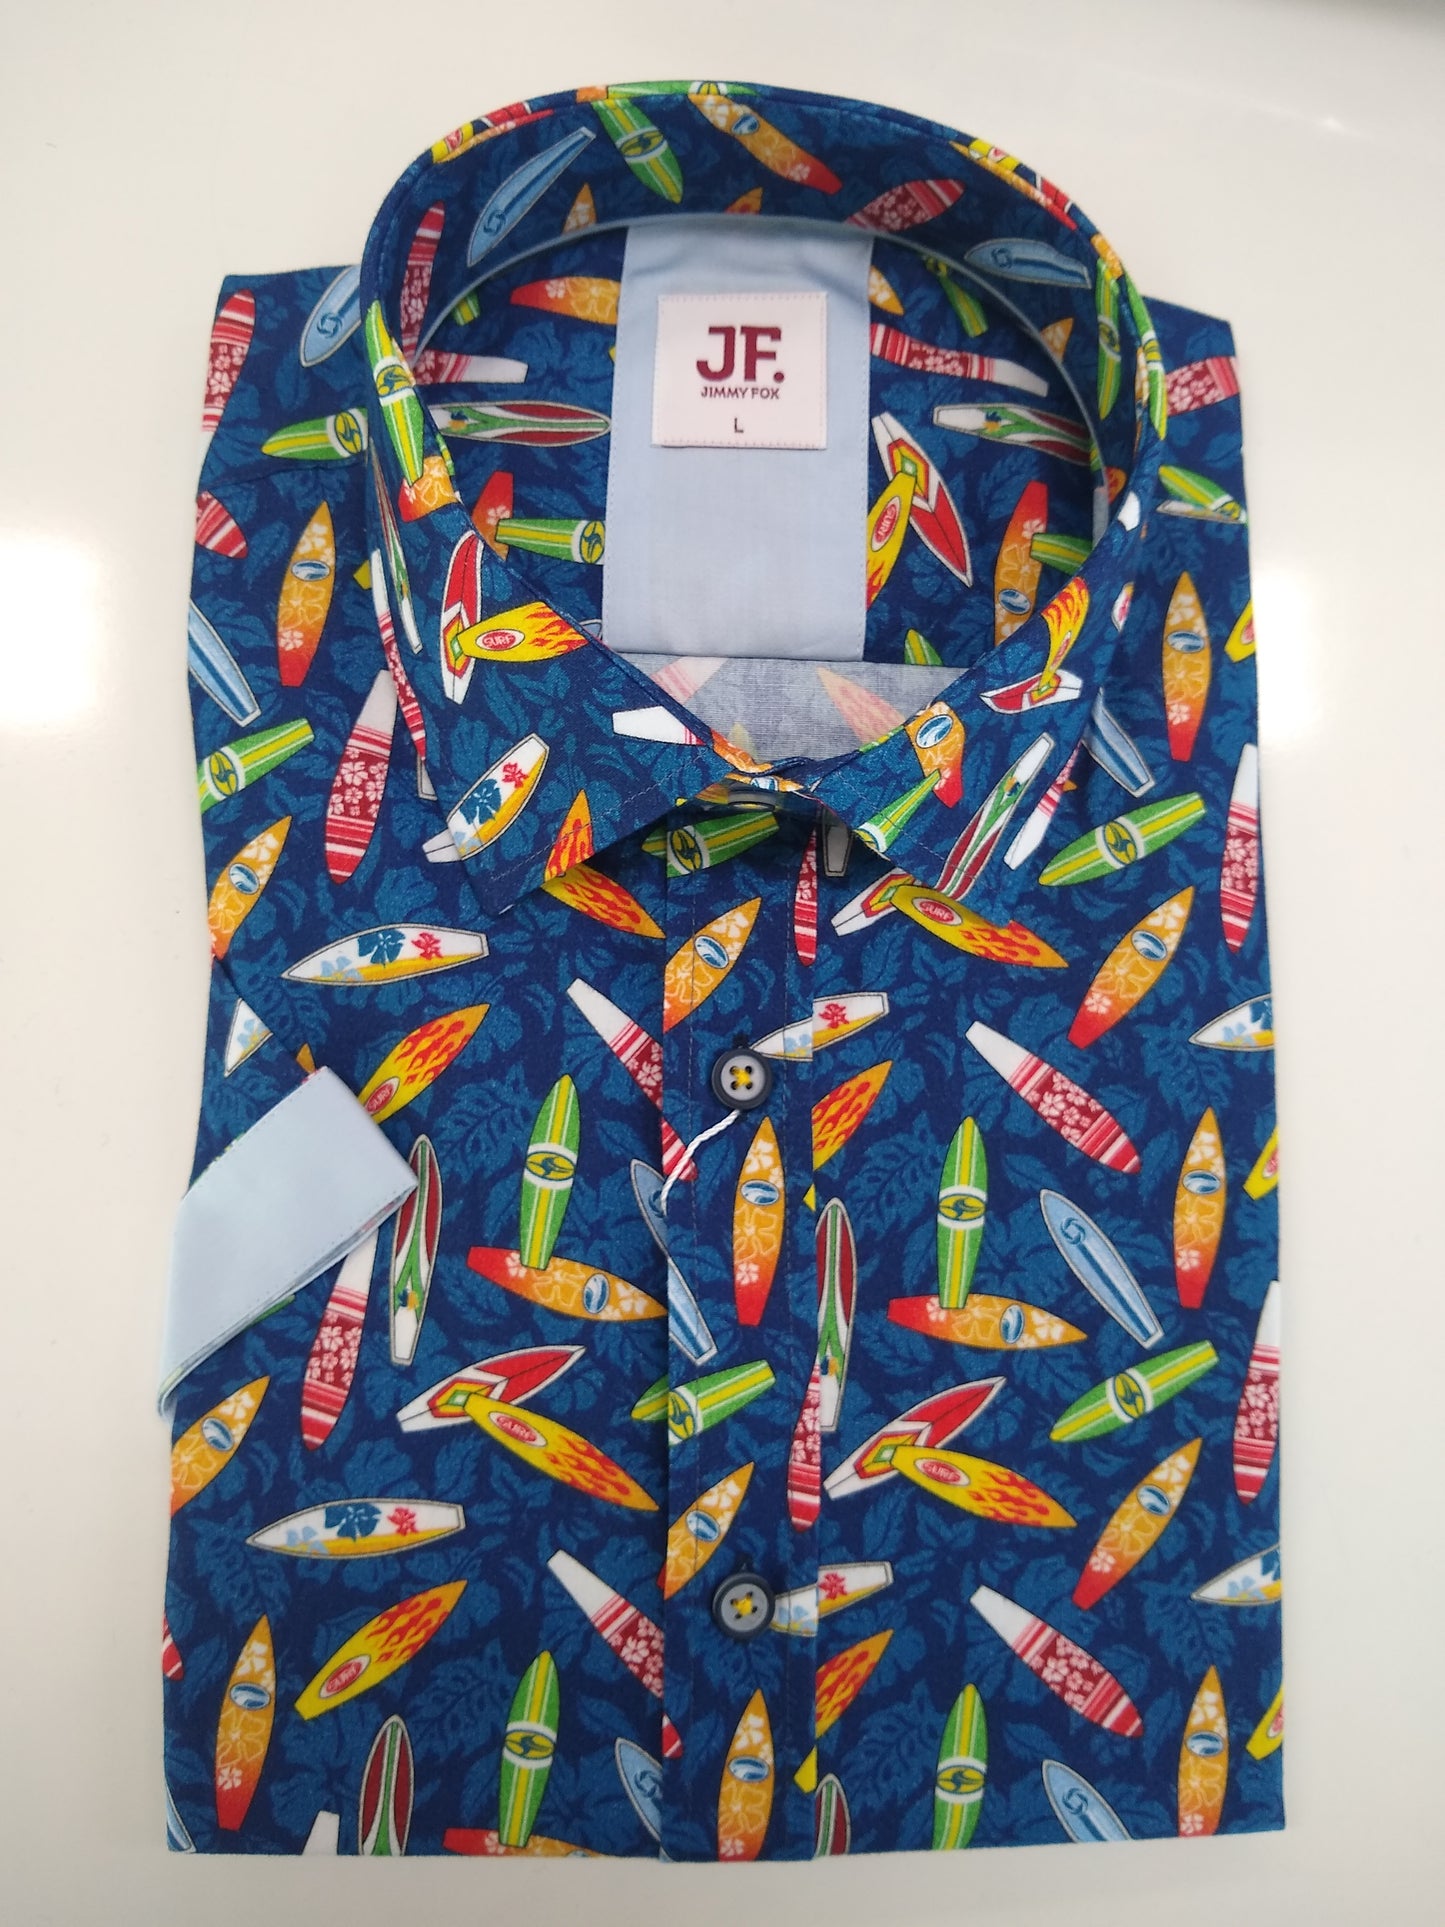 Jimmy Fox Surfboards Short Sleeve Shirt